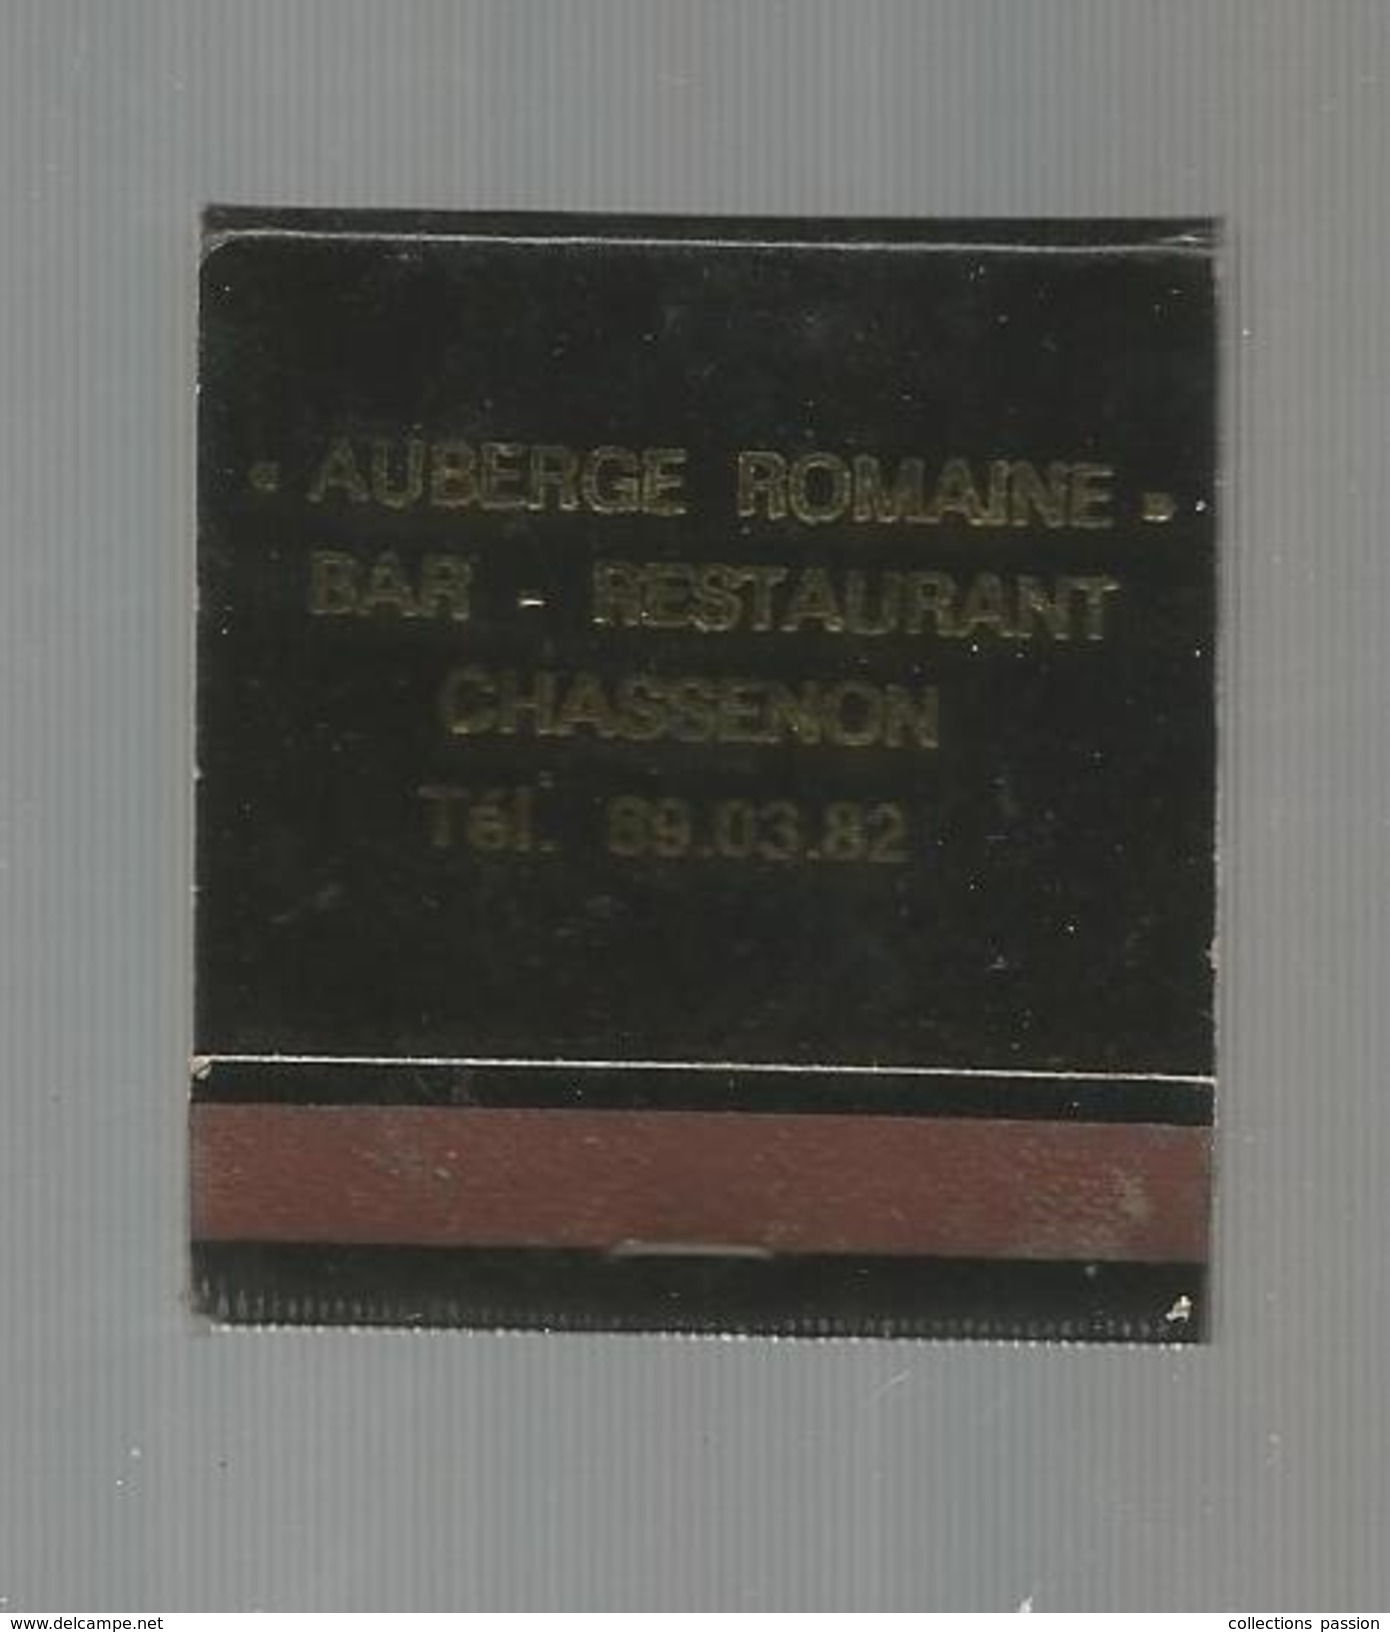 G-I-E , Tabac , Boites , Pochette D'ALLUMETTES , Publicité , AUBERGE ROMAINE , Bar , Restaurant , CHASSENON , Charente - Matchboxes